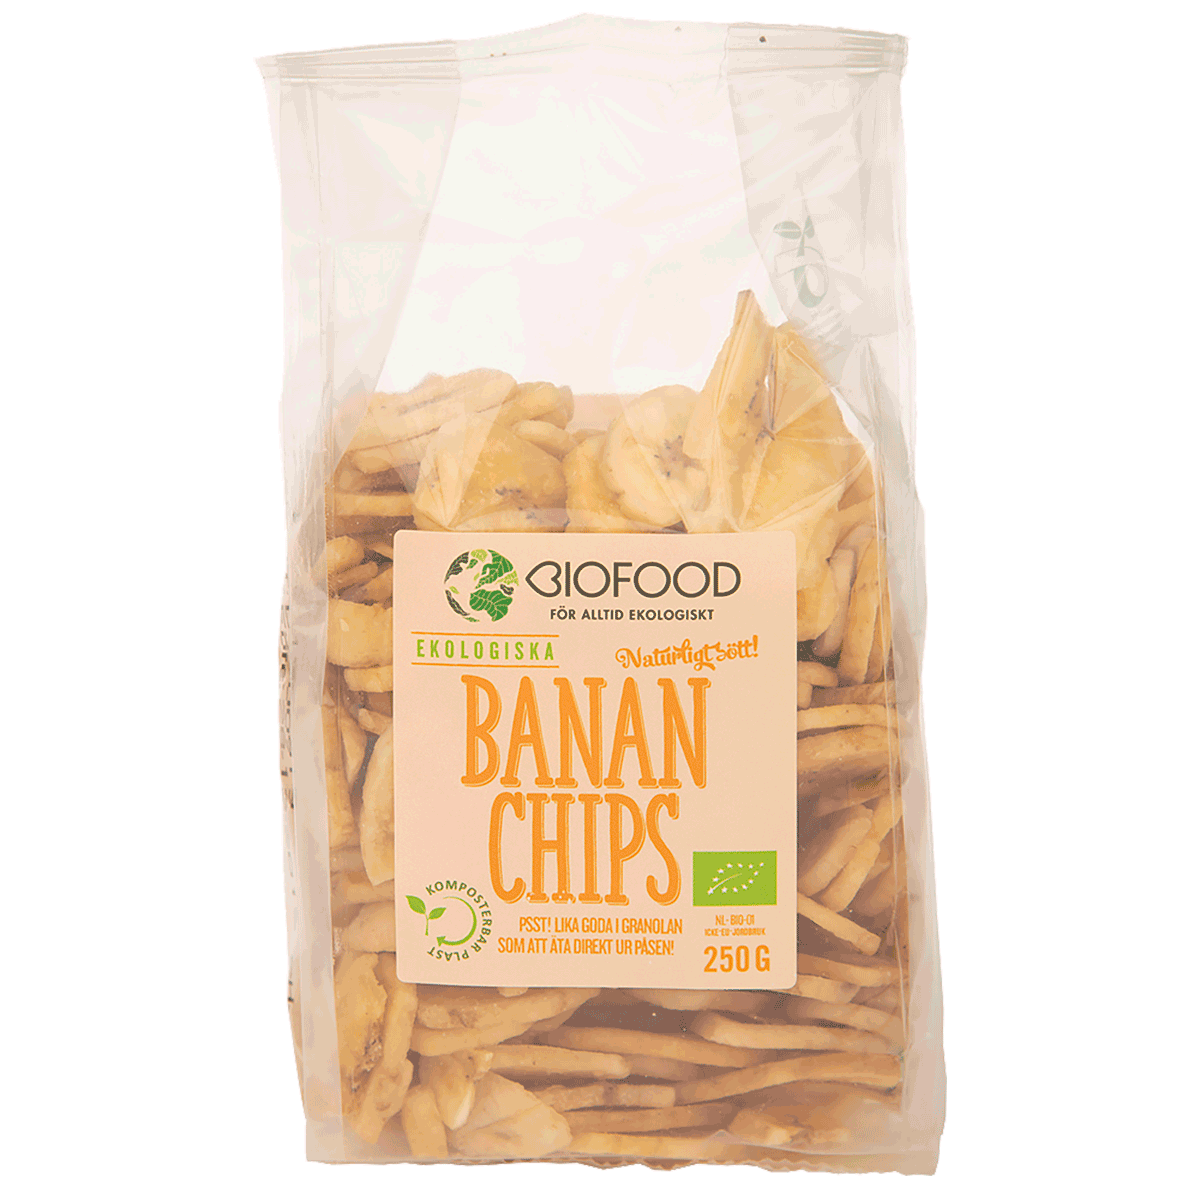 Bananchips från Biofood